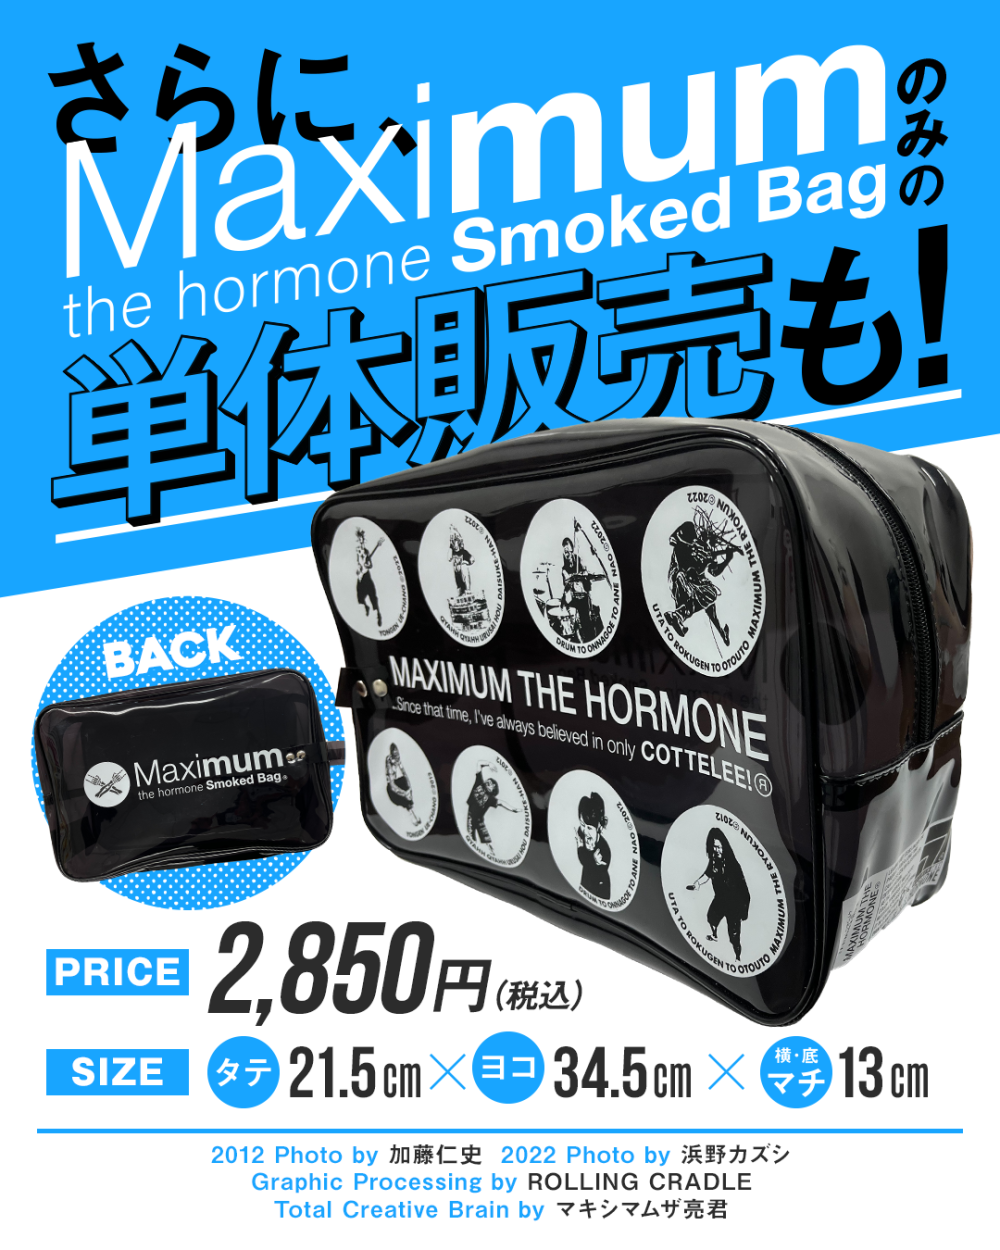 Maximum the hormone Smoked Bag - マキシマム ザ ホルモンONLINE SHOP